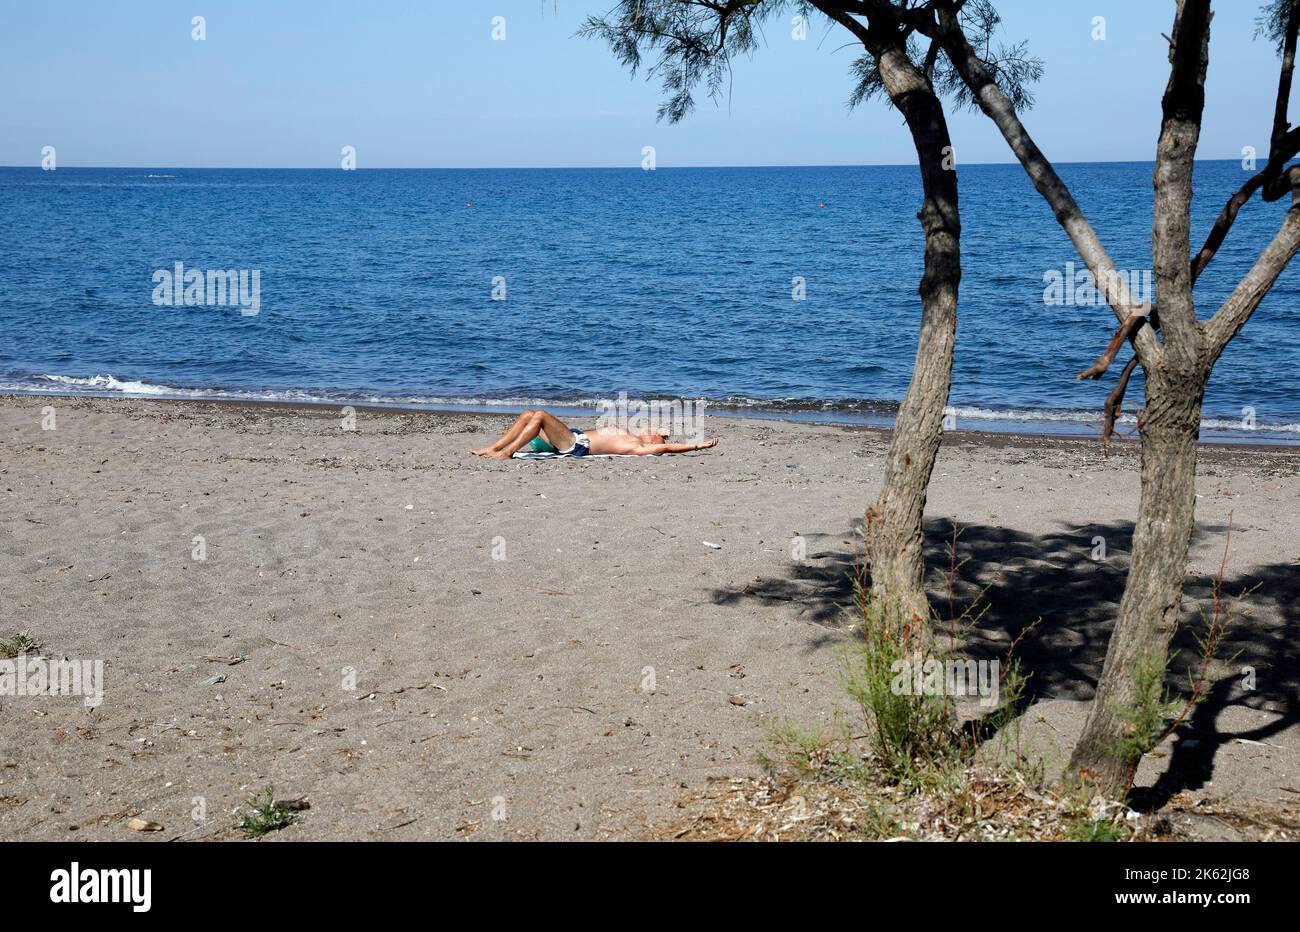 Man sunbathing, relaxing on a beach,  Lesvos (Lesbos/Mitylene) . Stock Photo